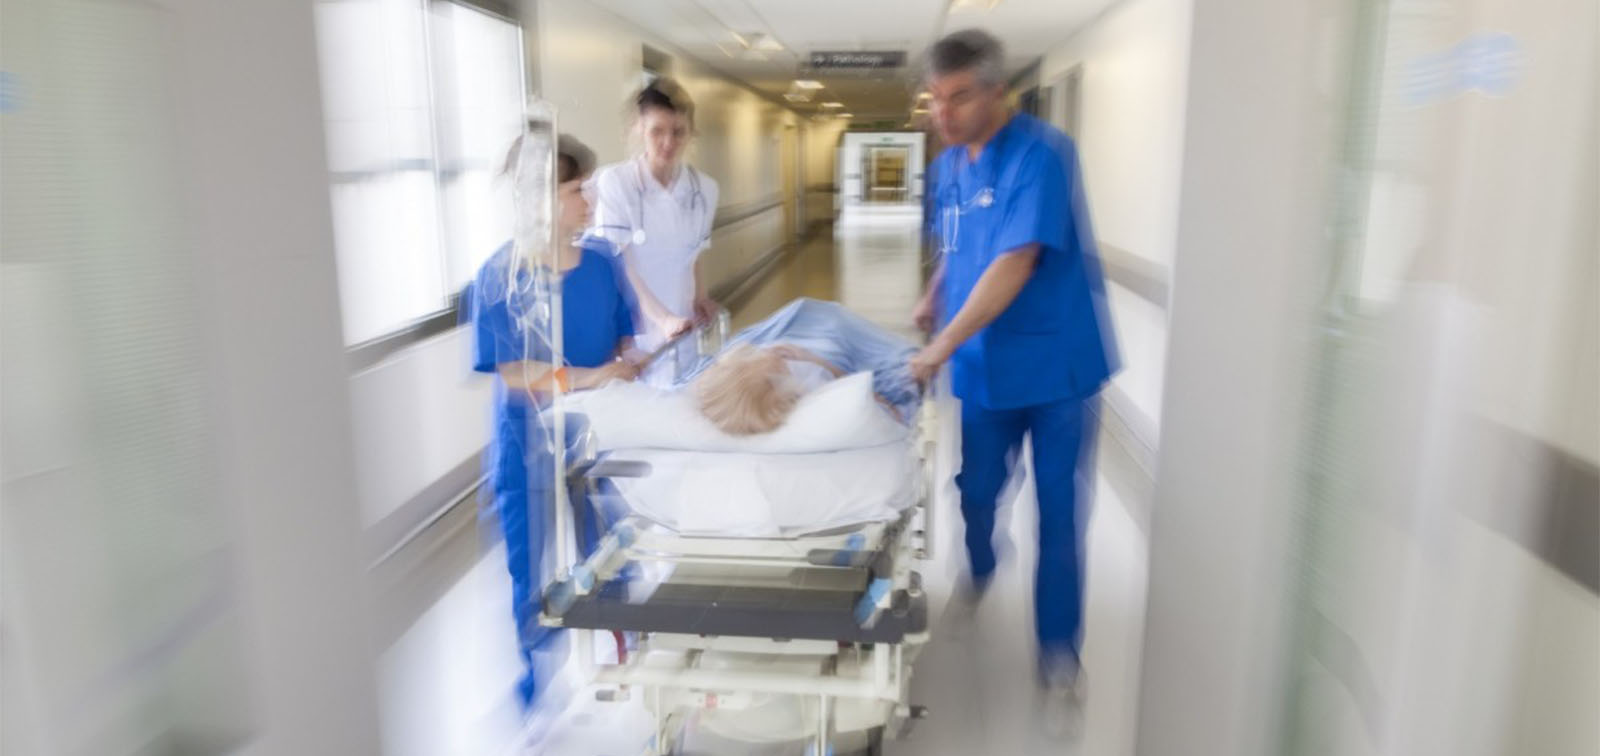 Personal mèdic tranporta un pacient hospitalari